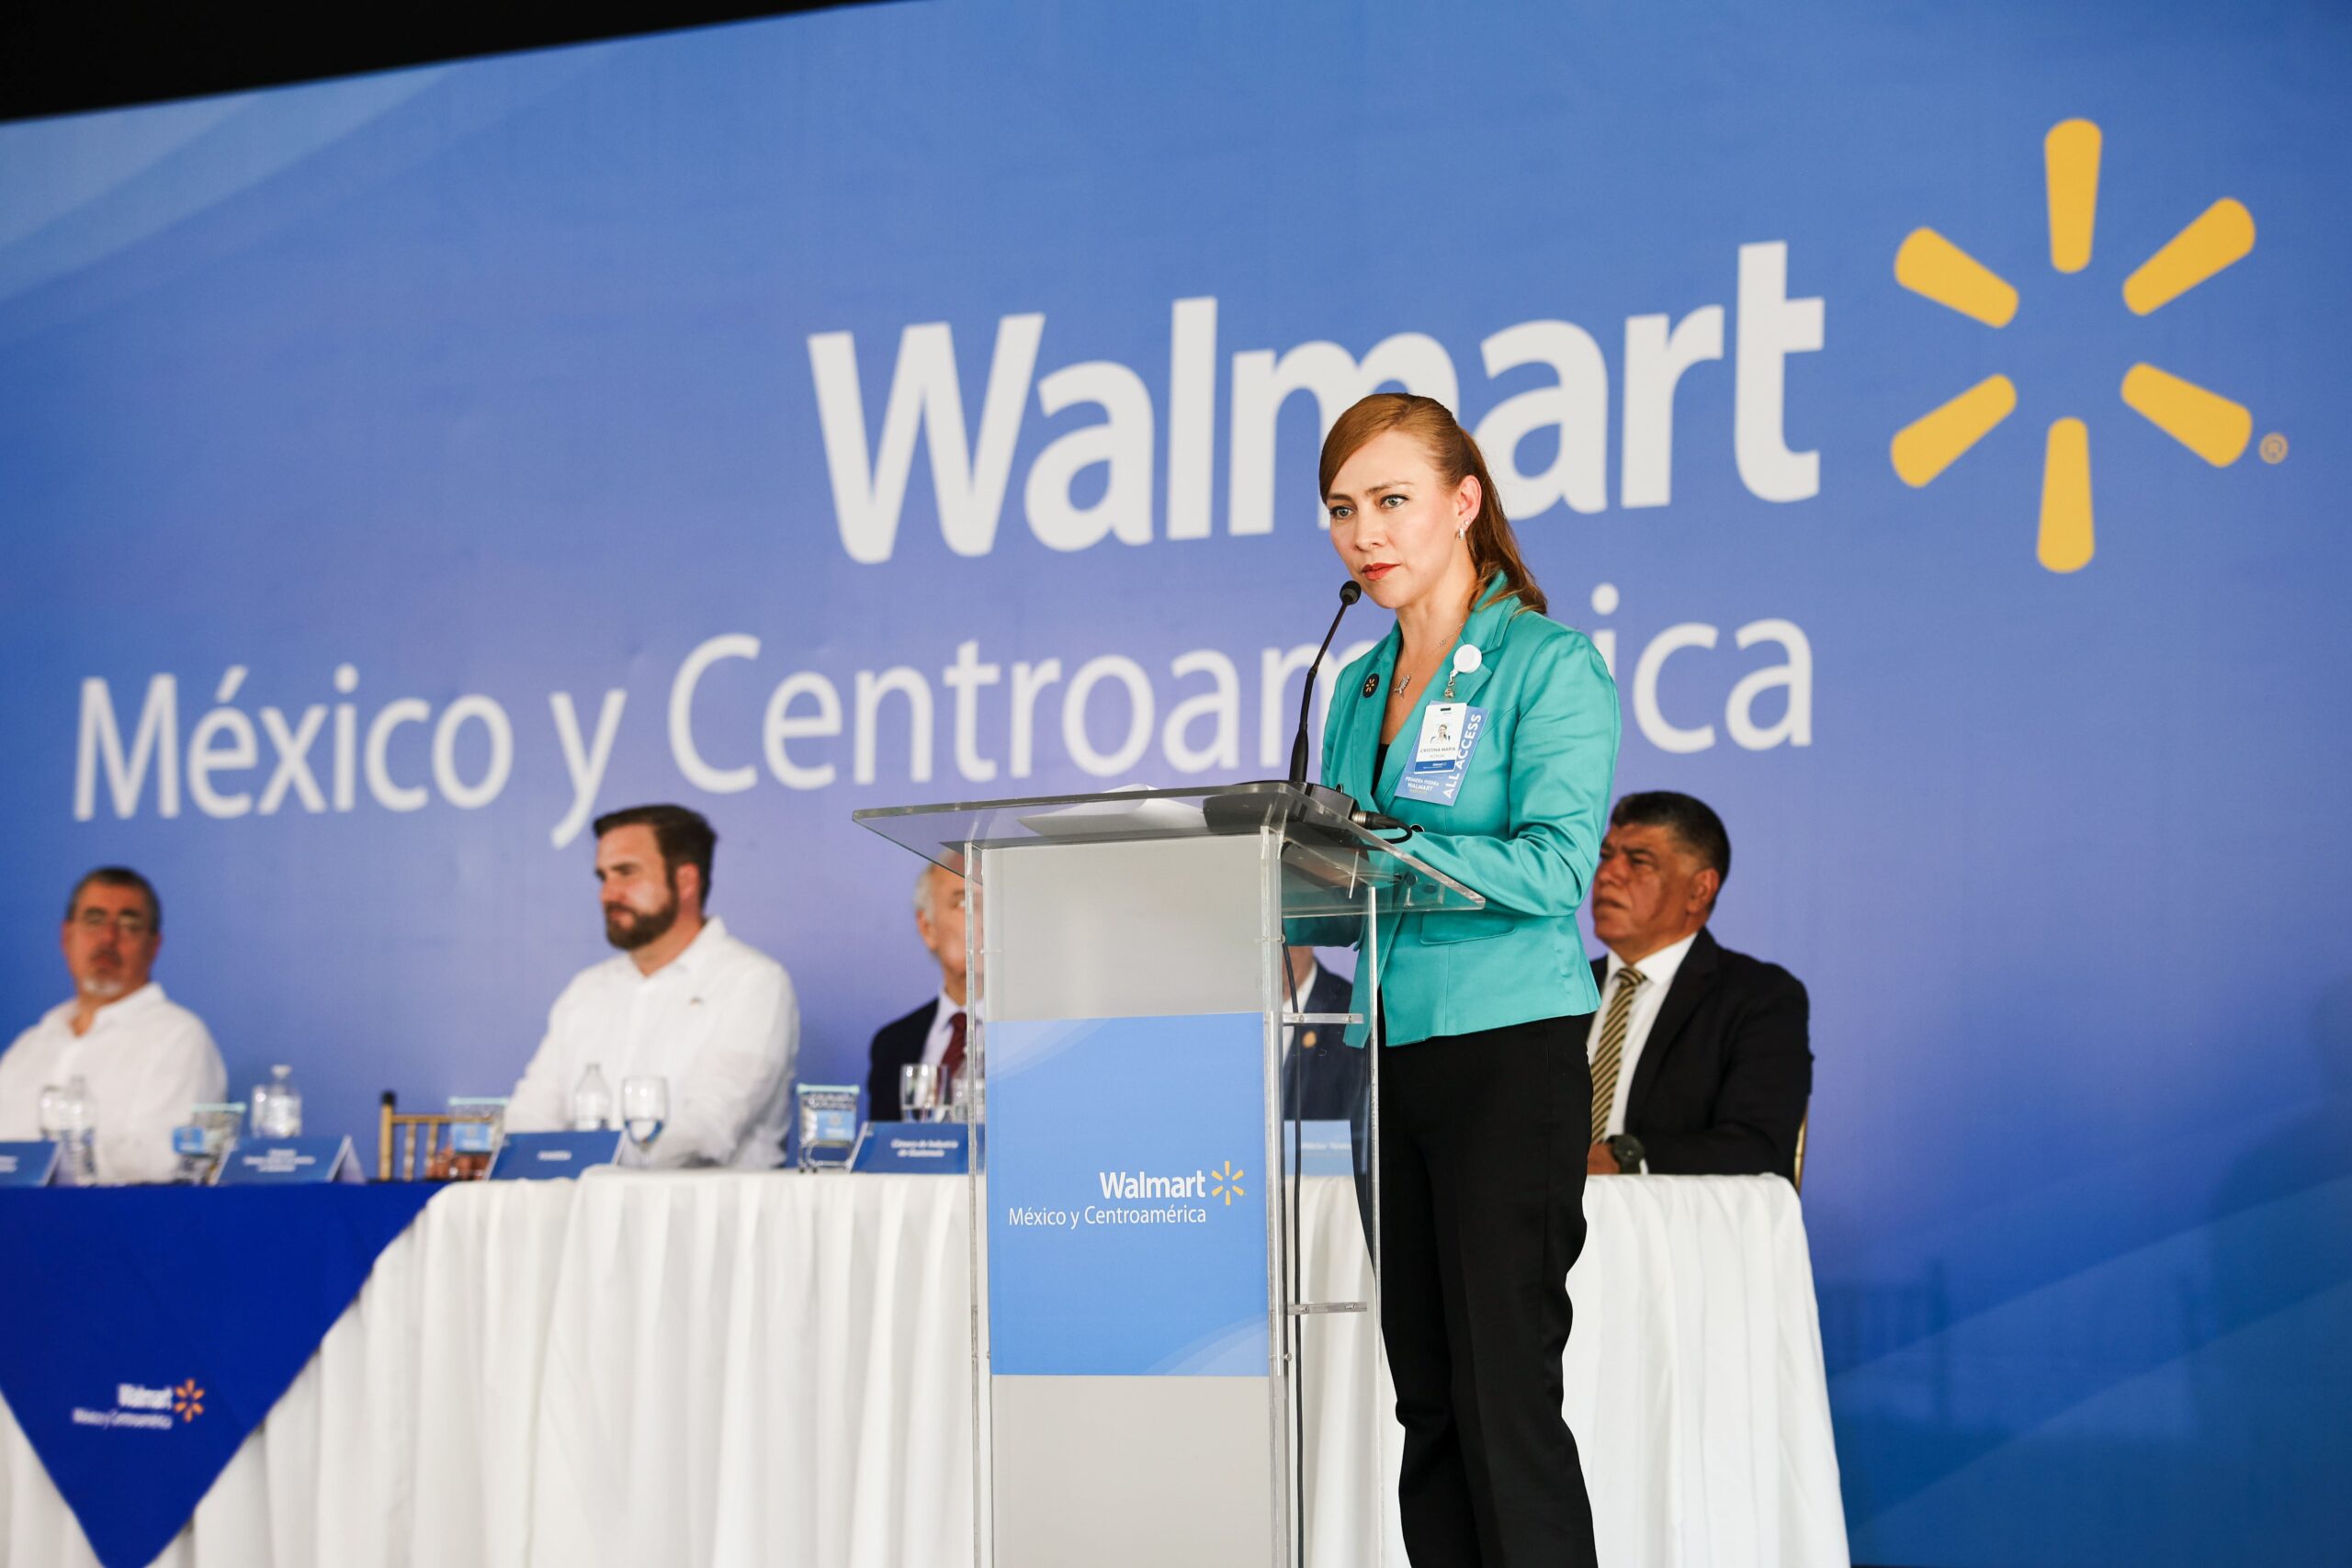 Walmart Centroamérica anuncia fuerte compromiso de inversión en Guatemala